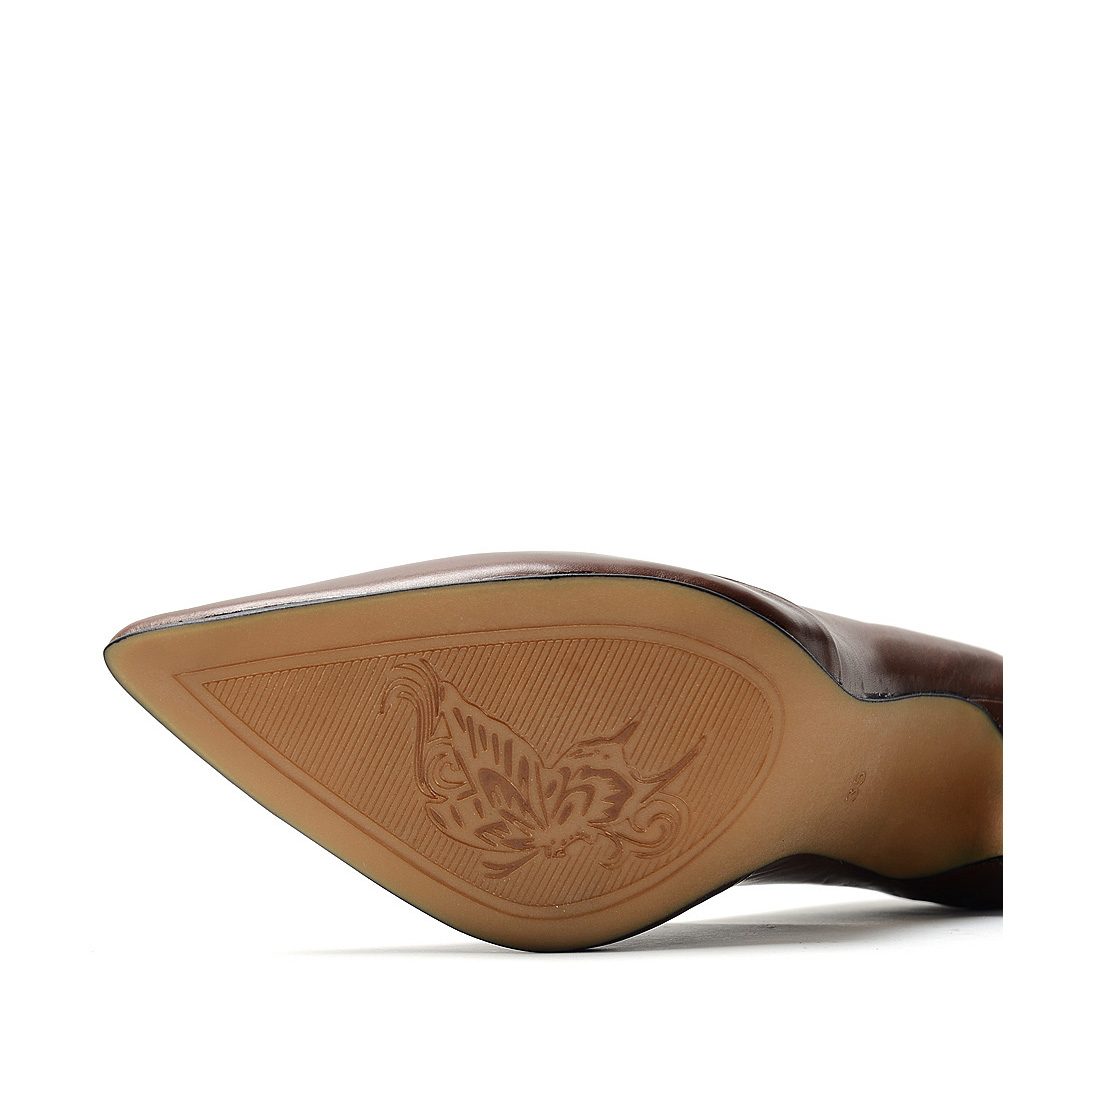 [Run&Heels]高贵风简约头层牛皮革（小牛皮）单鞋(尺码标准)
编号：A3635D1A74